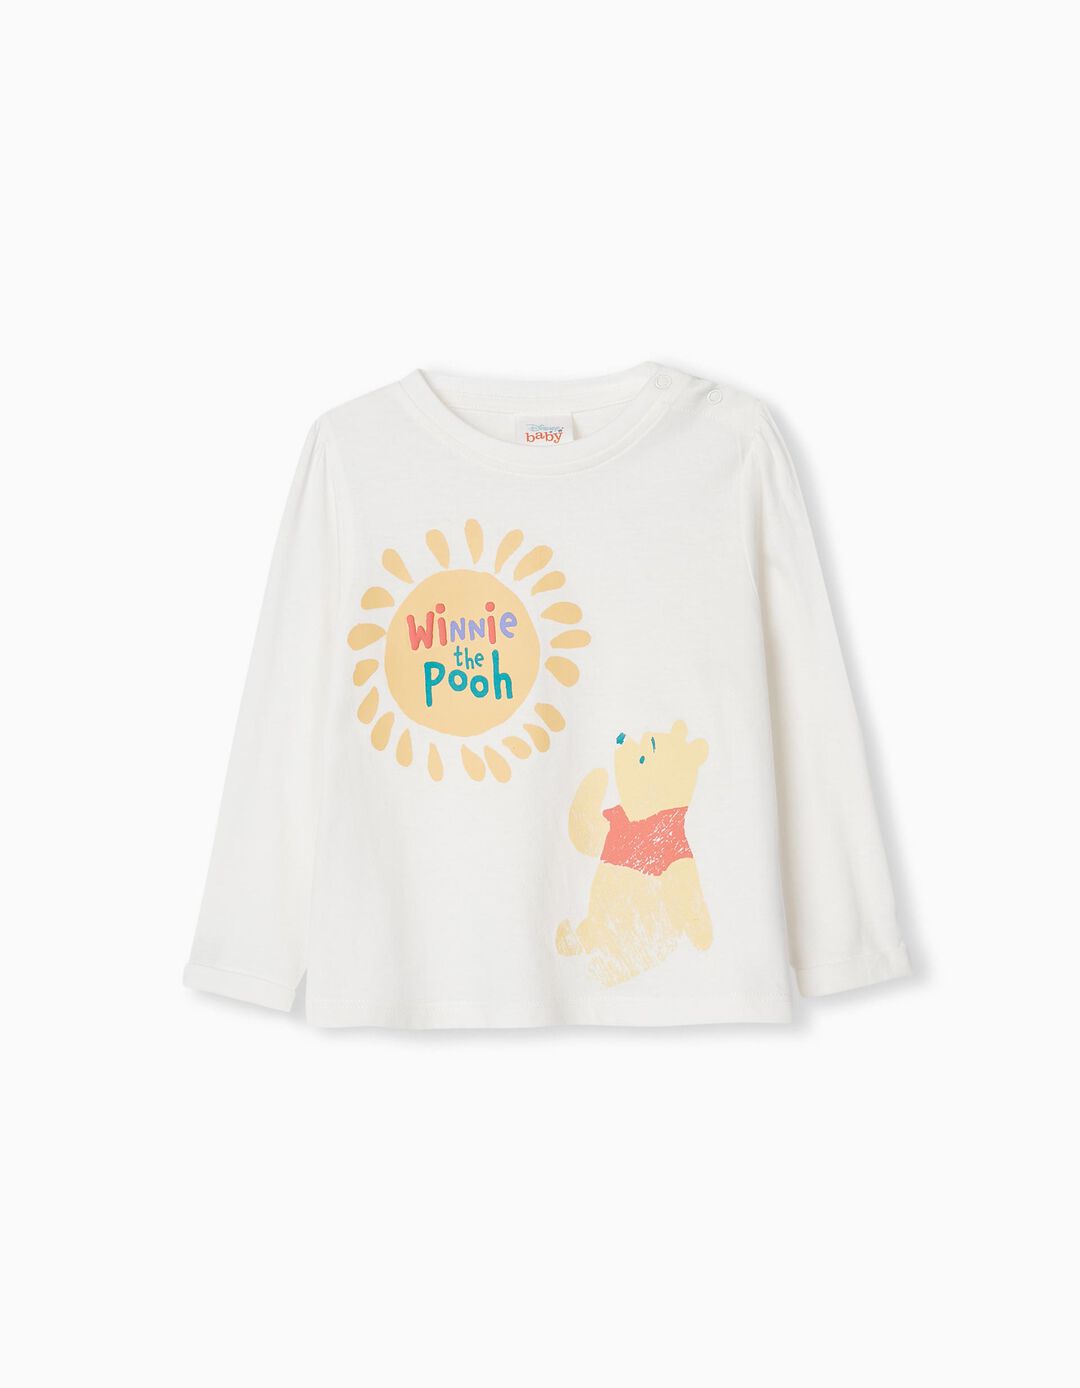 Winnie the Pooh' Long Sleeve T-shirt, Newborn Girls, White